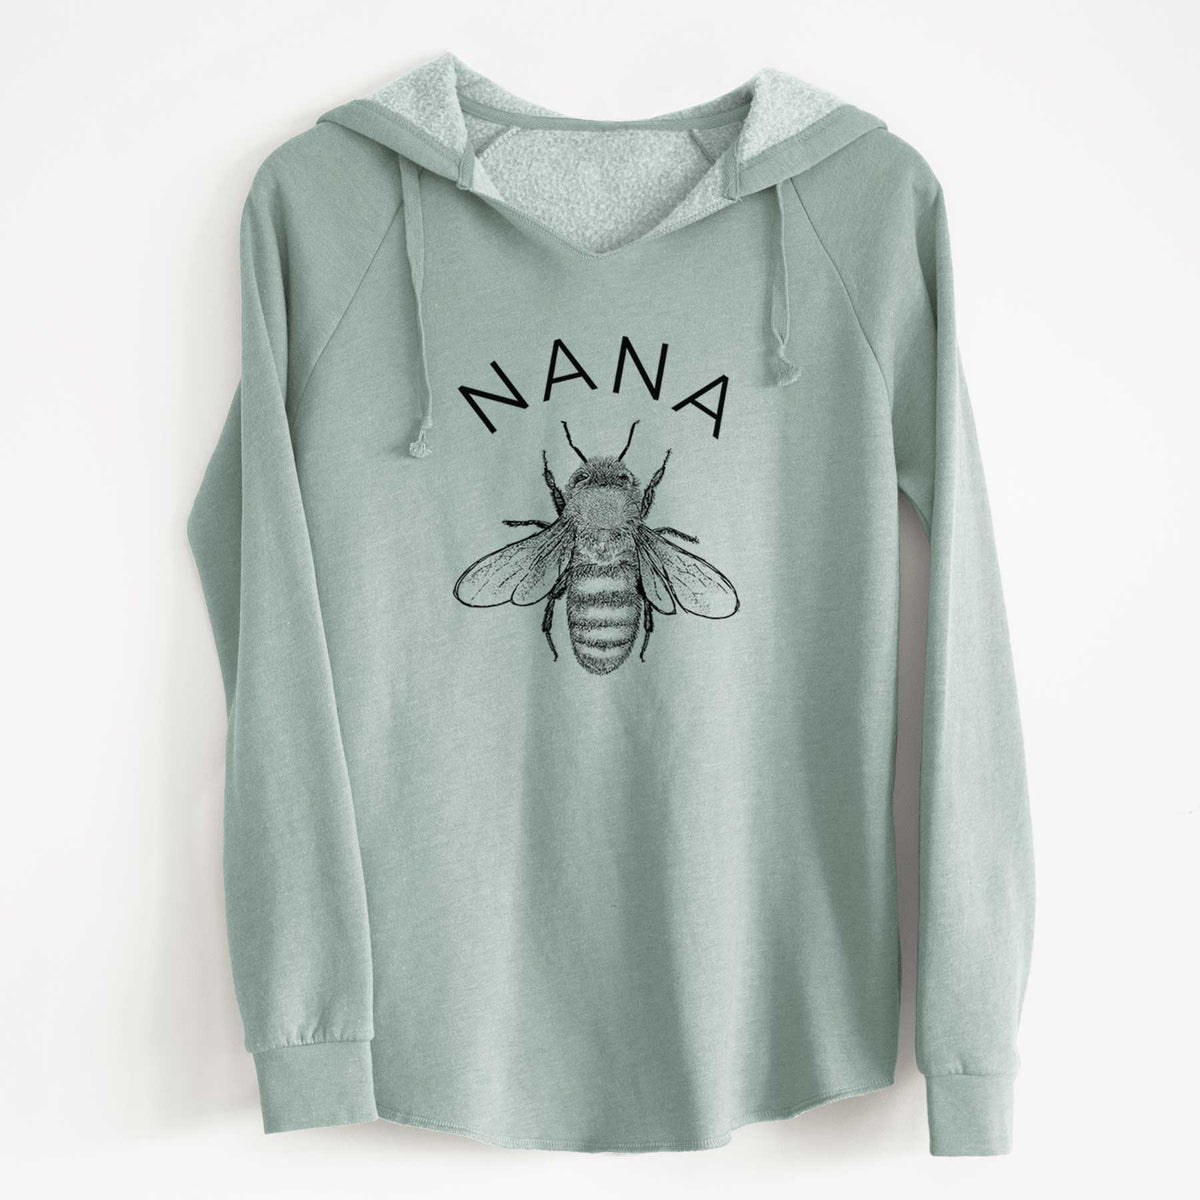 Nana Bee - Cali Wave Hooded Sweatshirt